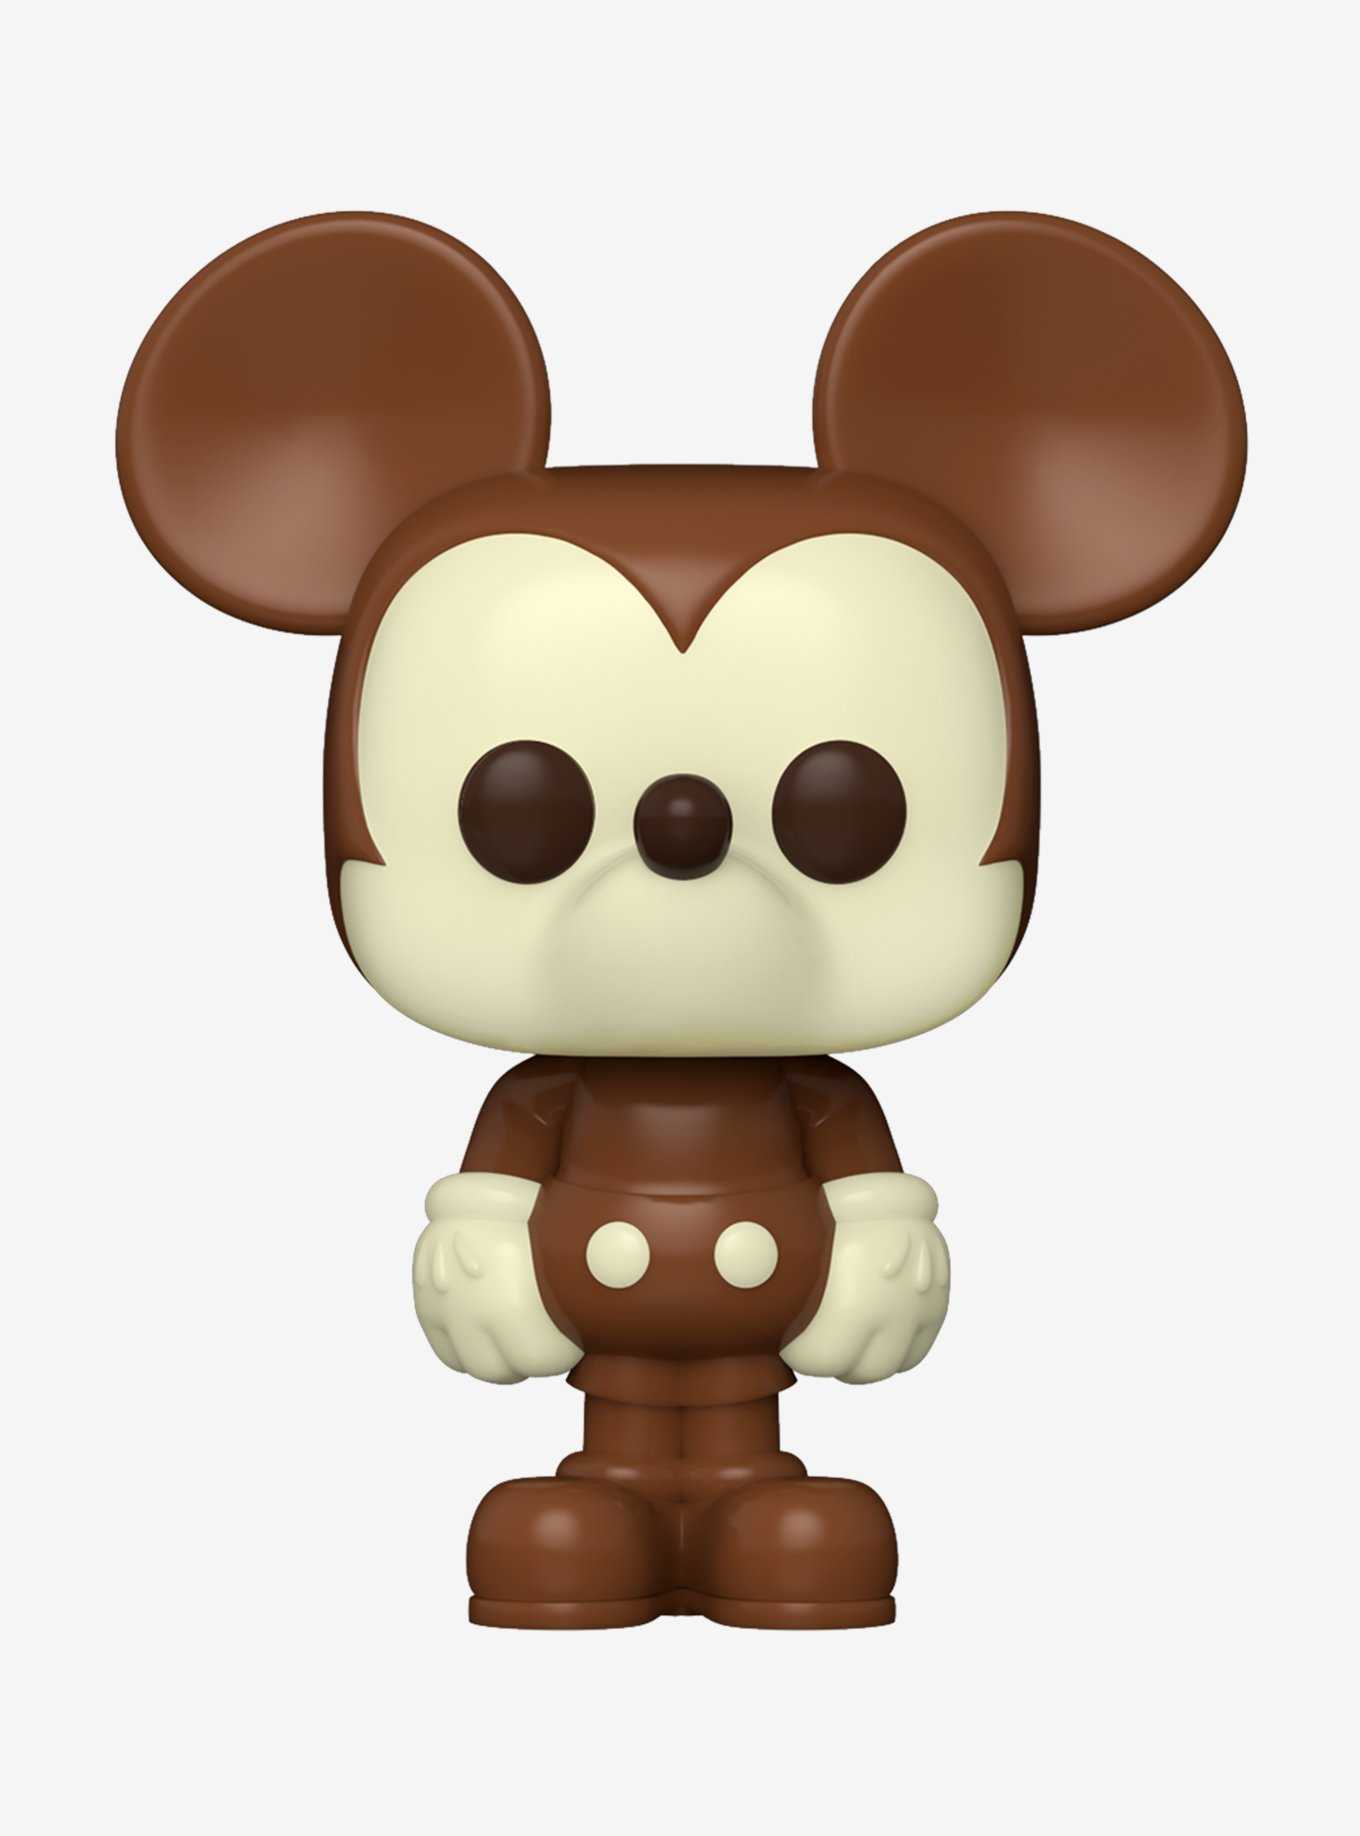 Disney100 Mickey Mouse Platinum Figural Mug